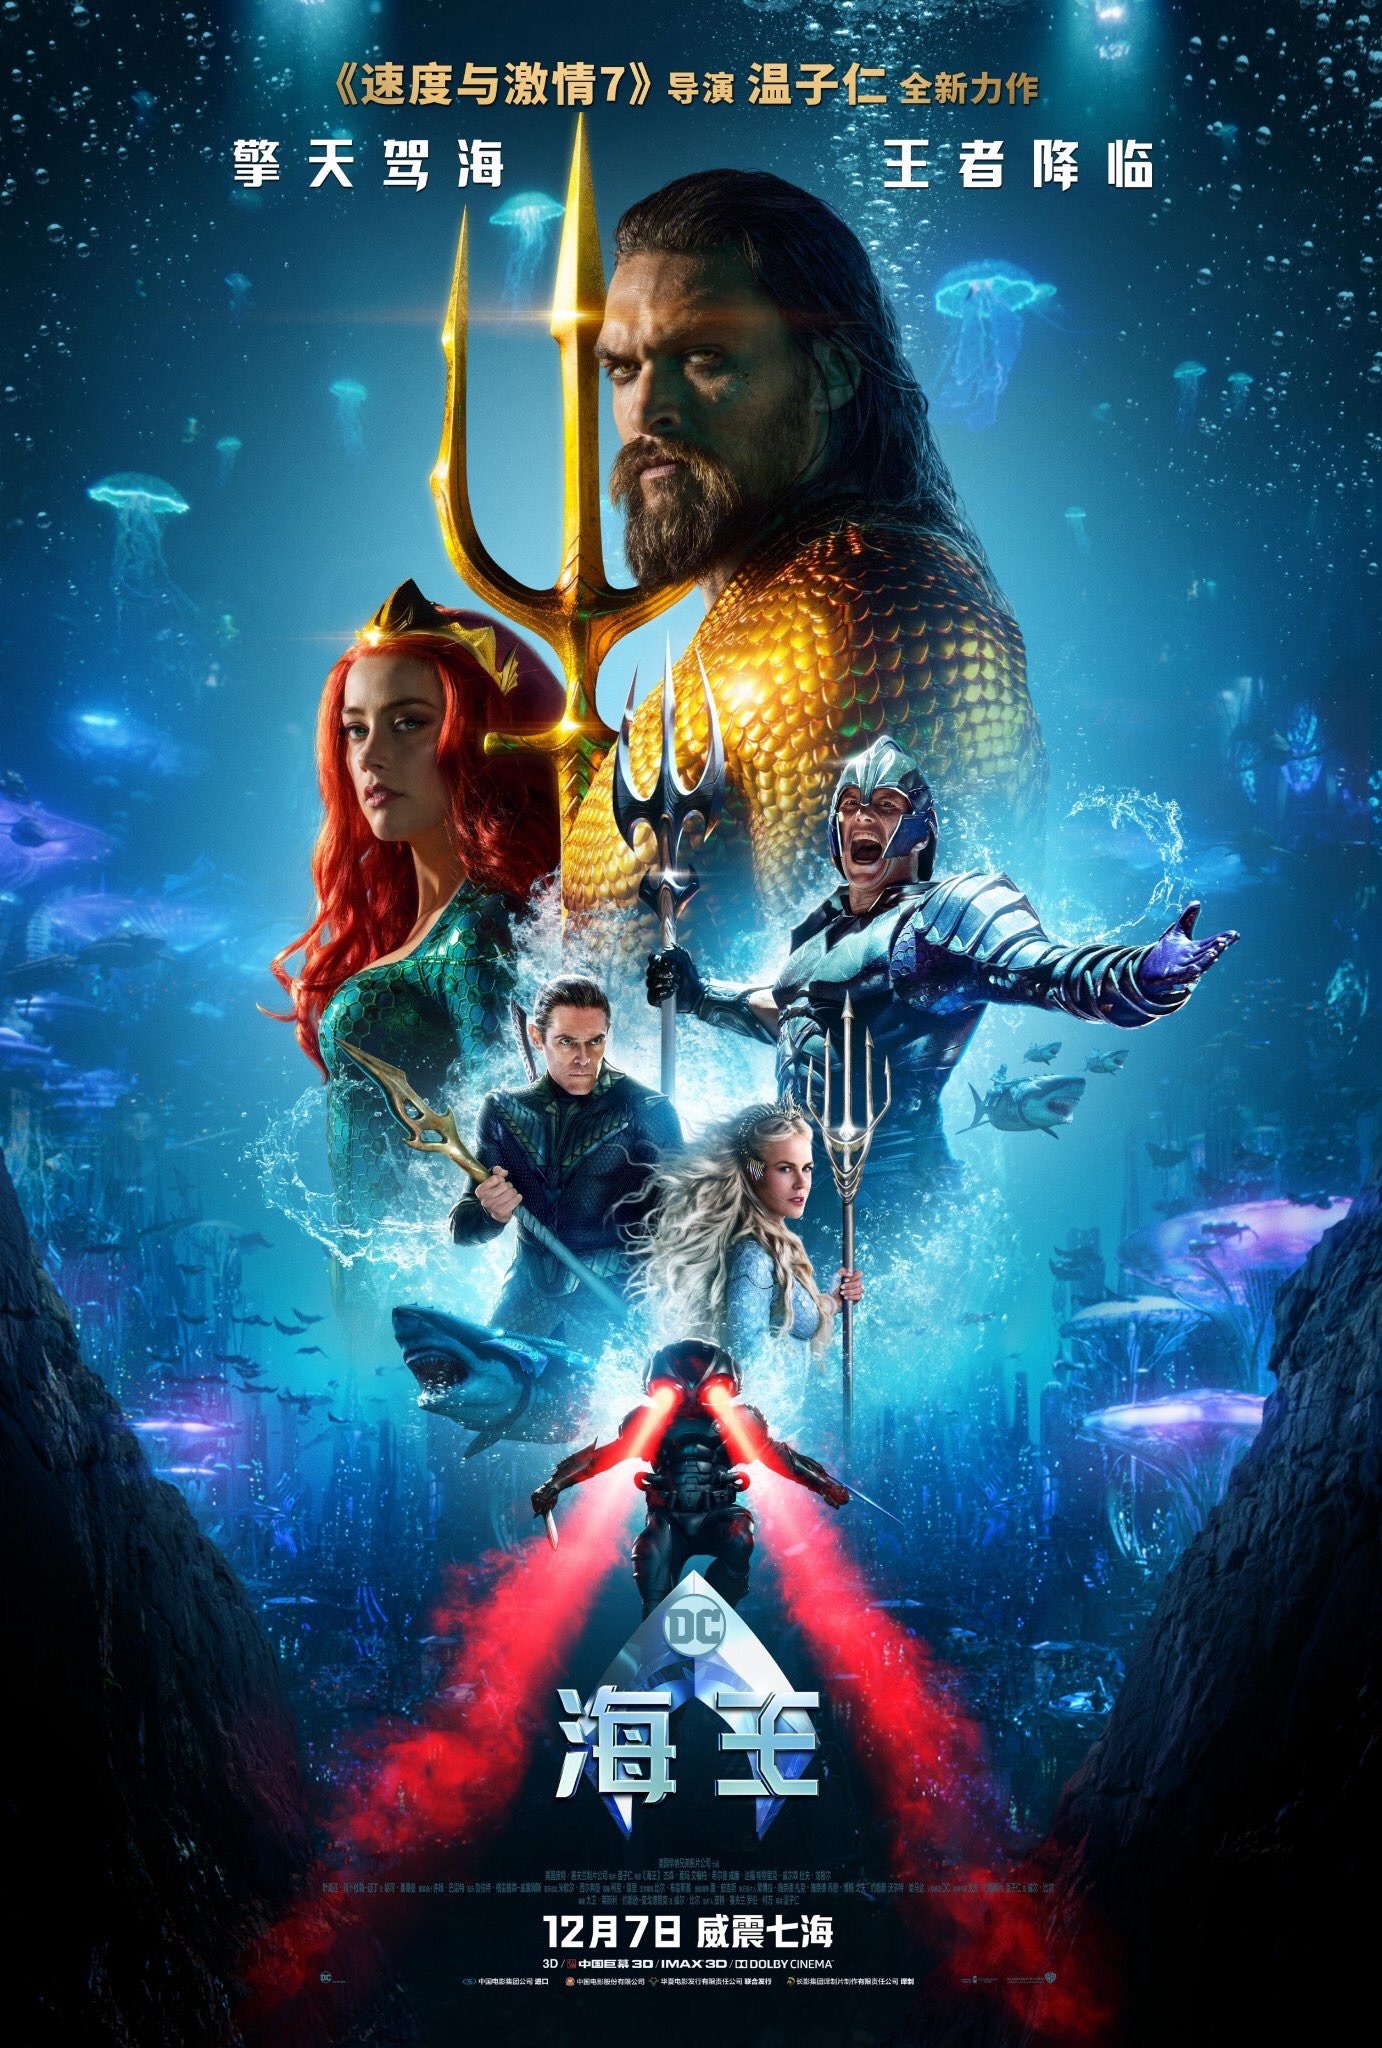 Mega Sized Movie Poster Image for Aquaman (#17 of 22)